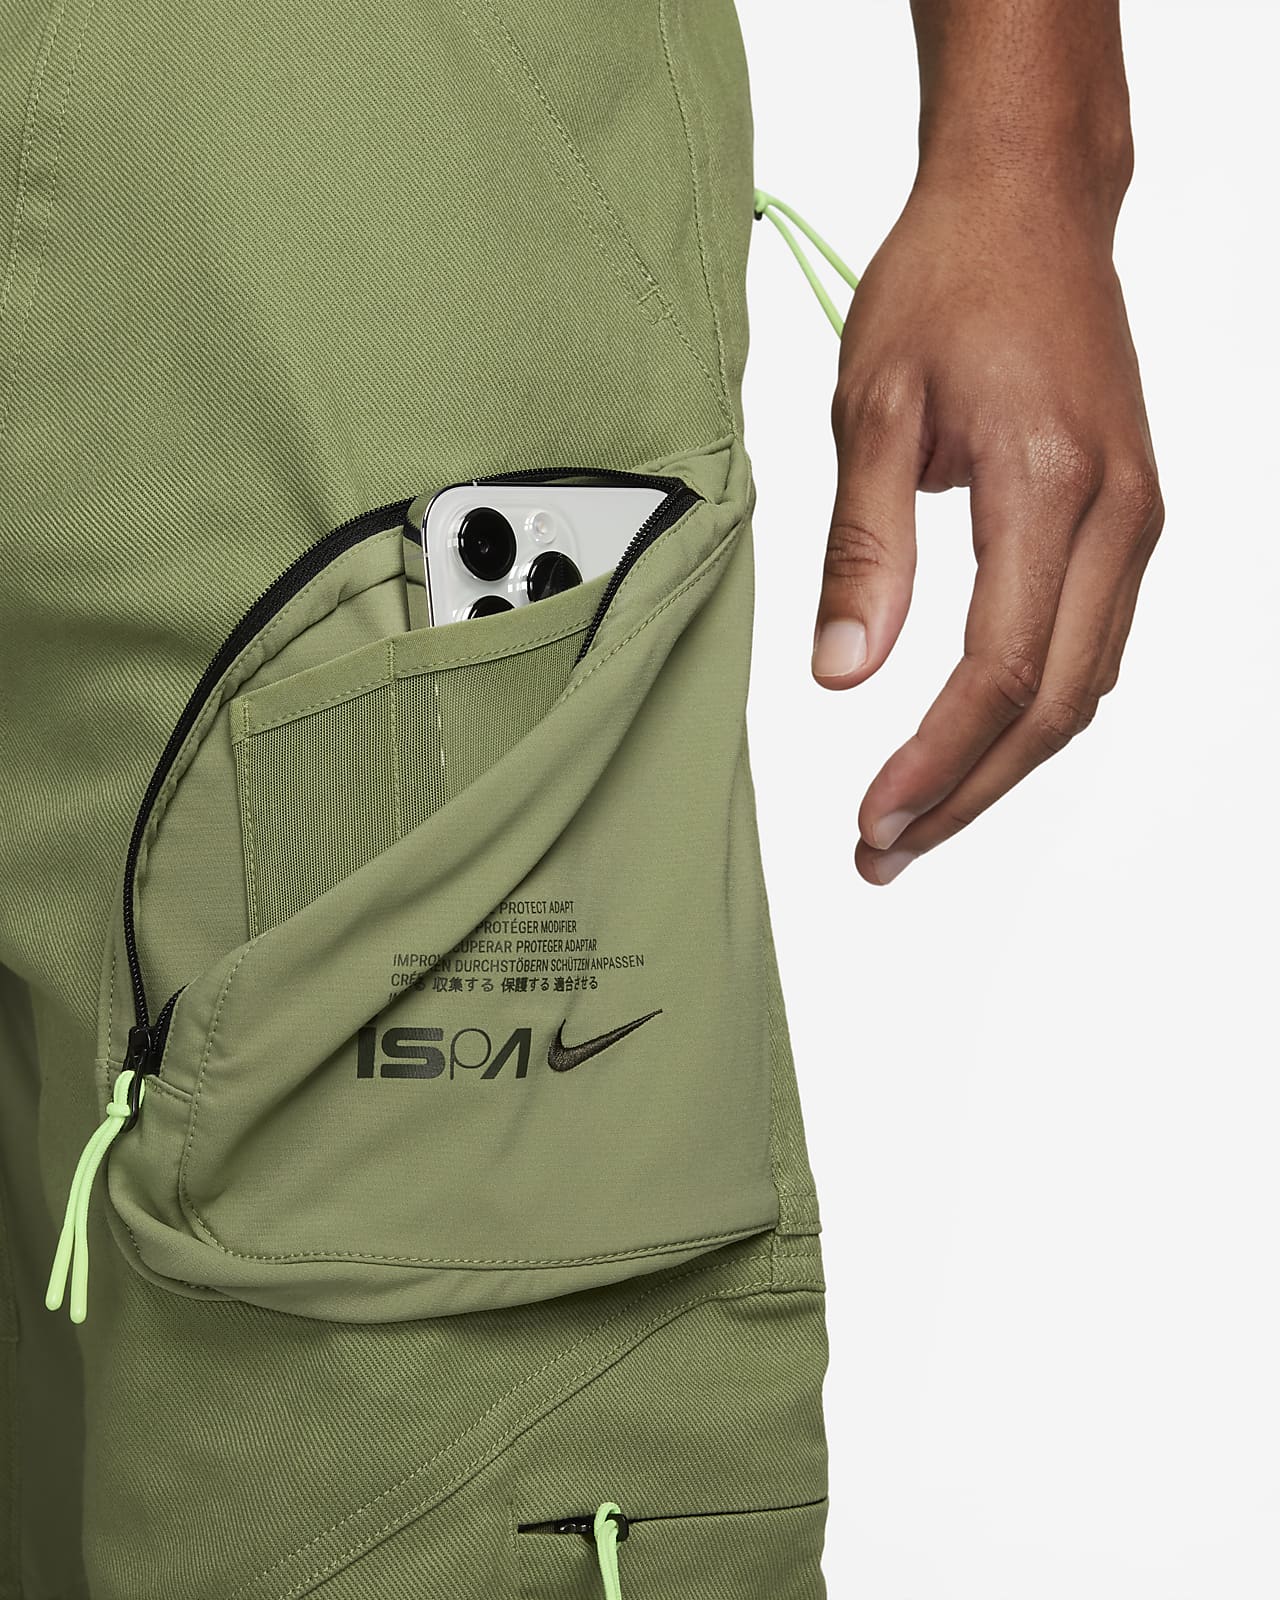 Nike ISPA Pants 2.0